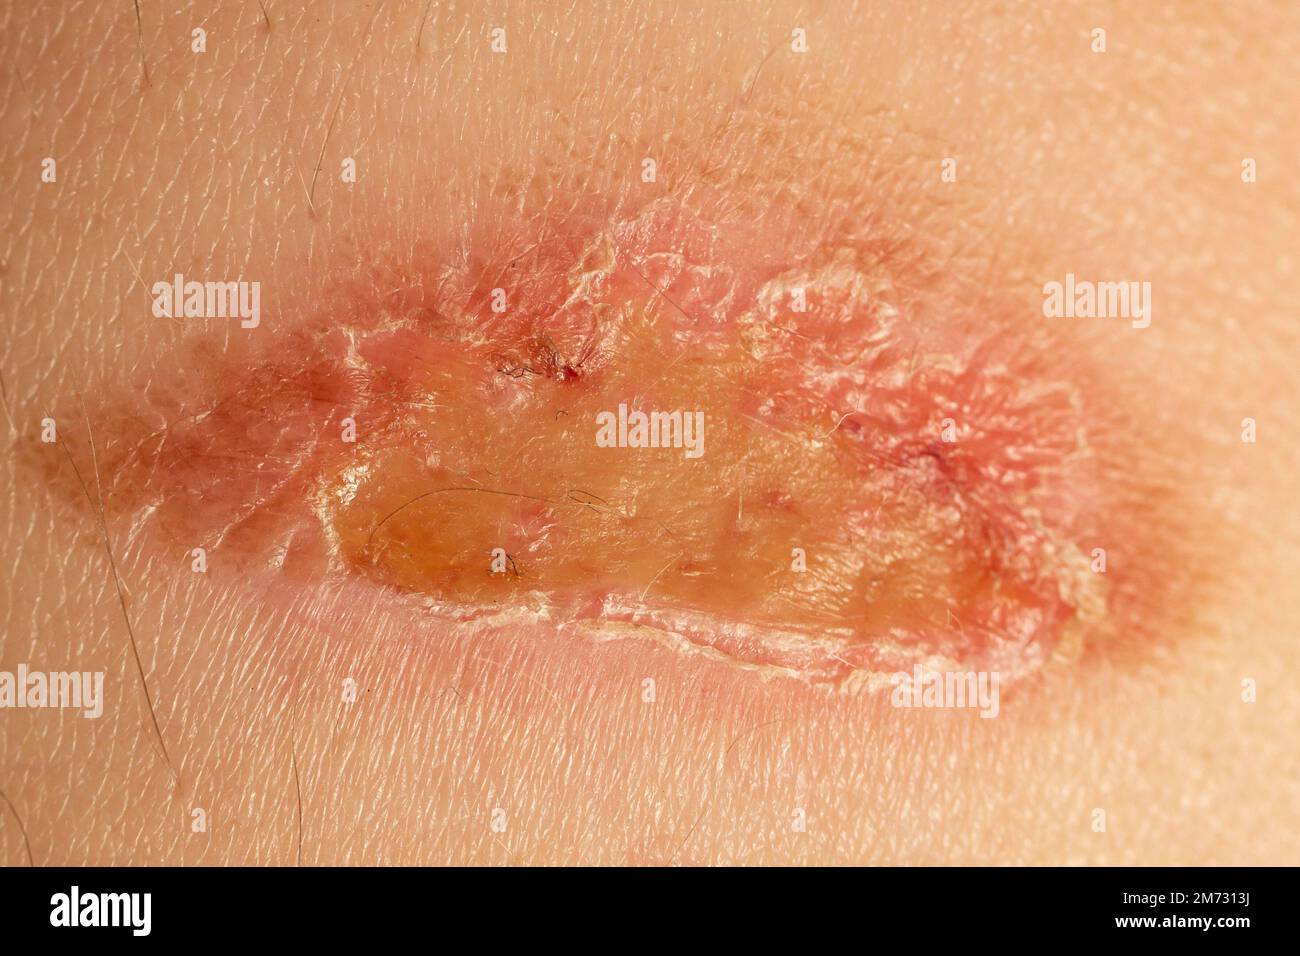 burn wound on skin texture, soft focus extreme macro Stock Photo